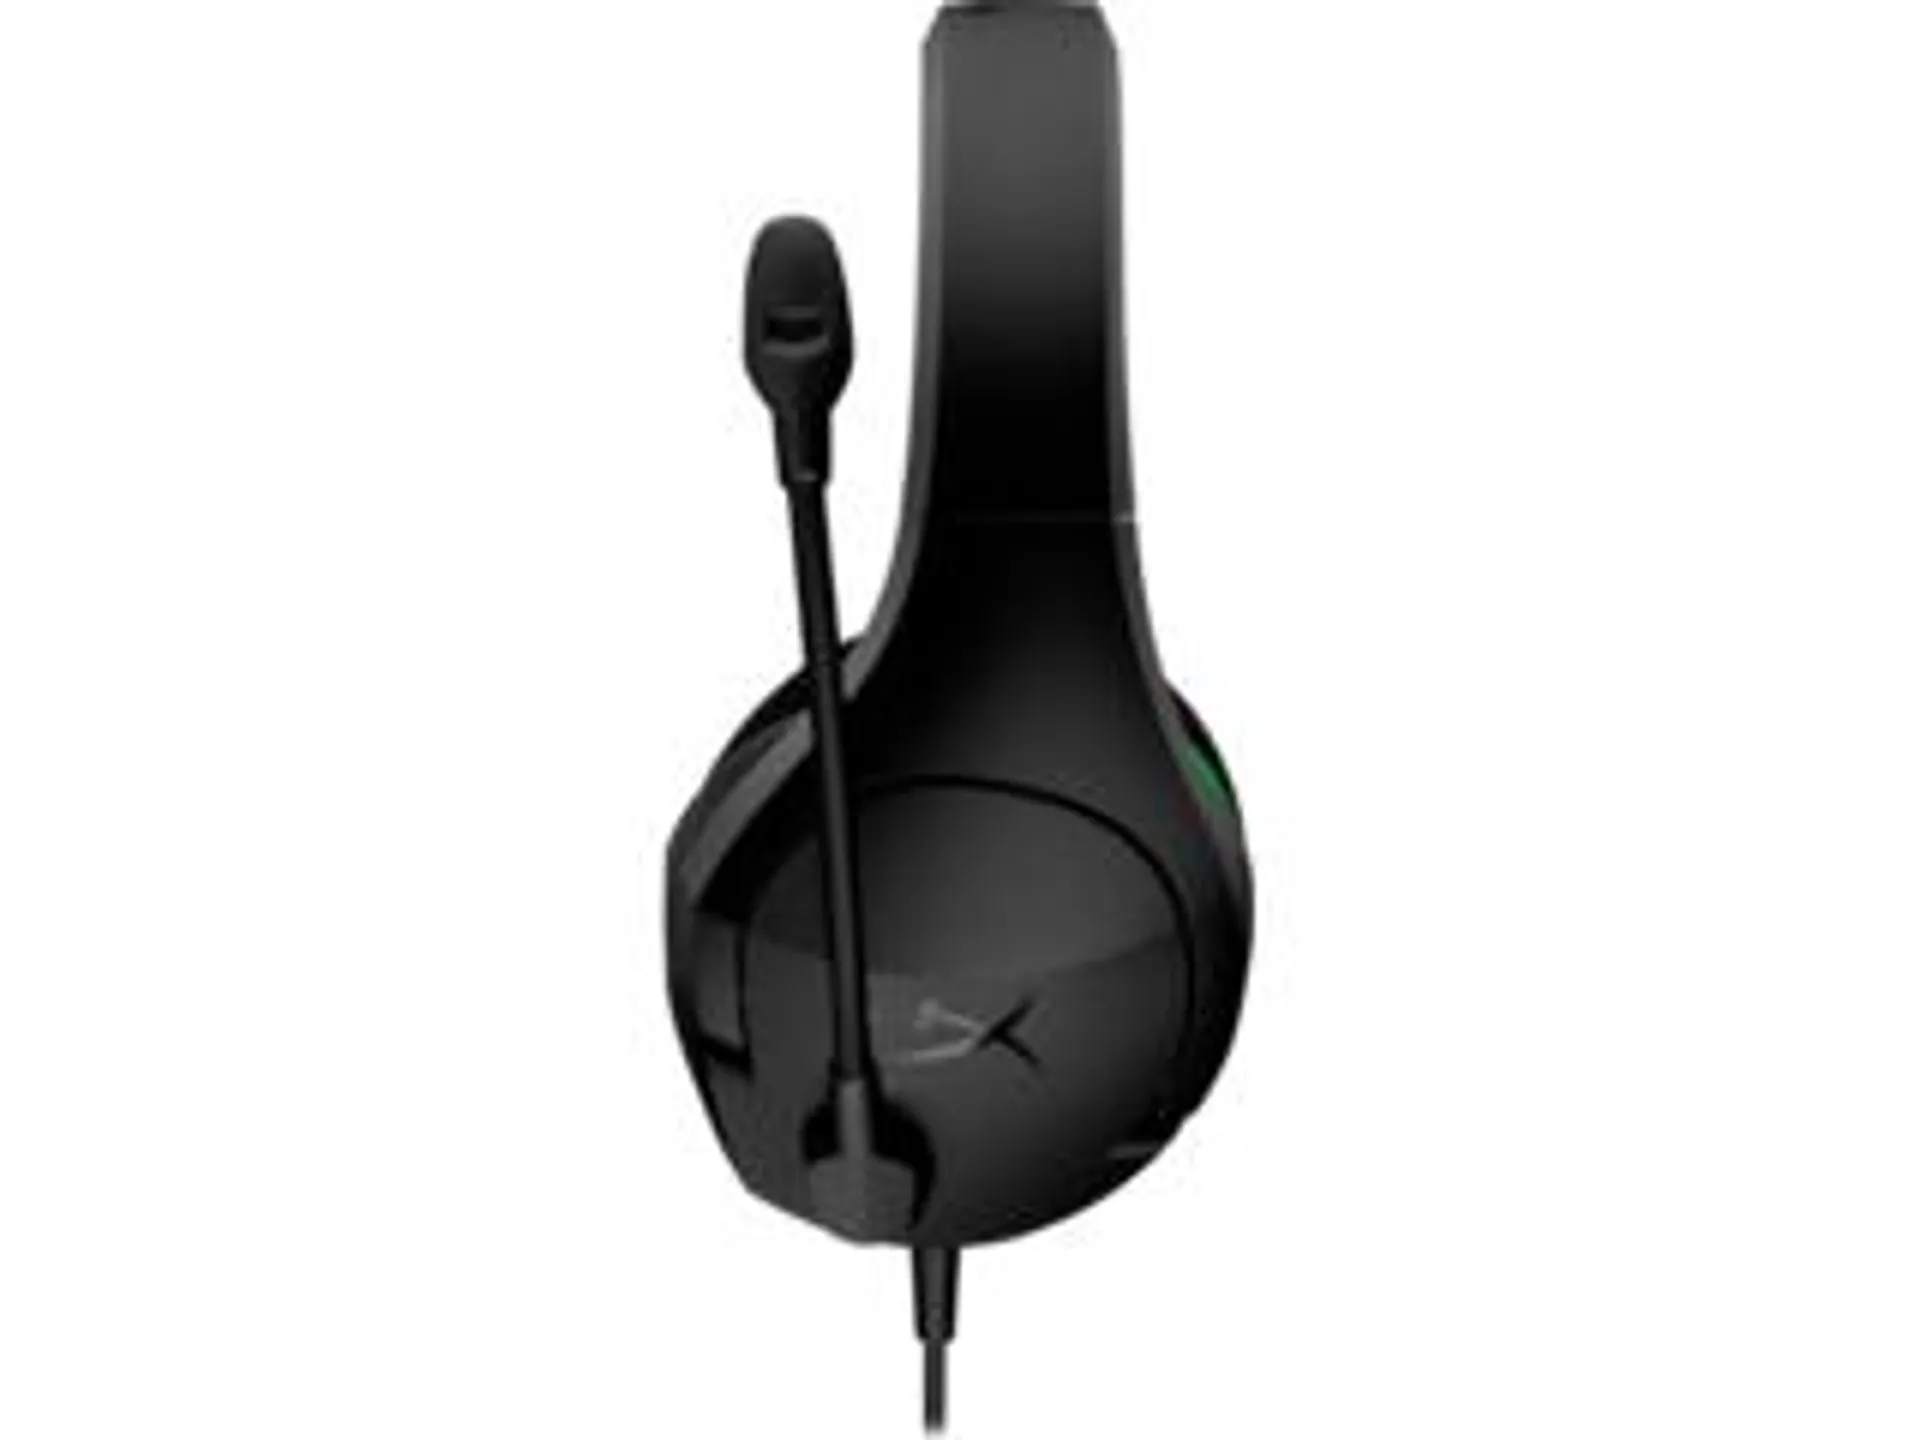 HyperX CloudX Stinger Core - Gaming Headset (Black-Green) - Xbox